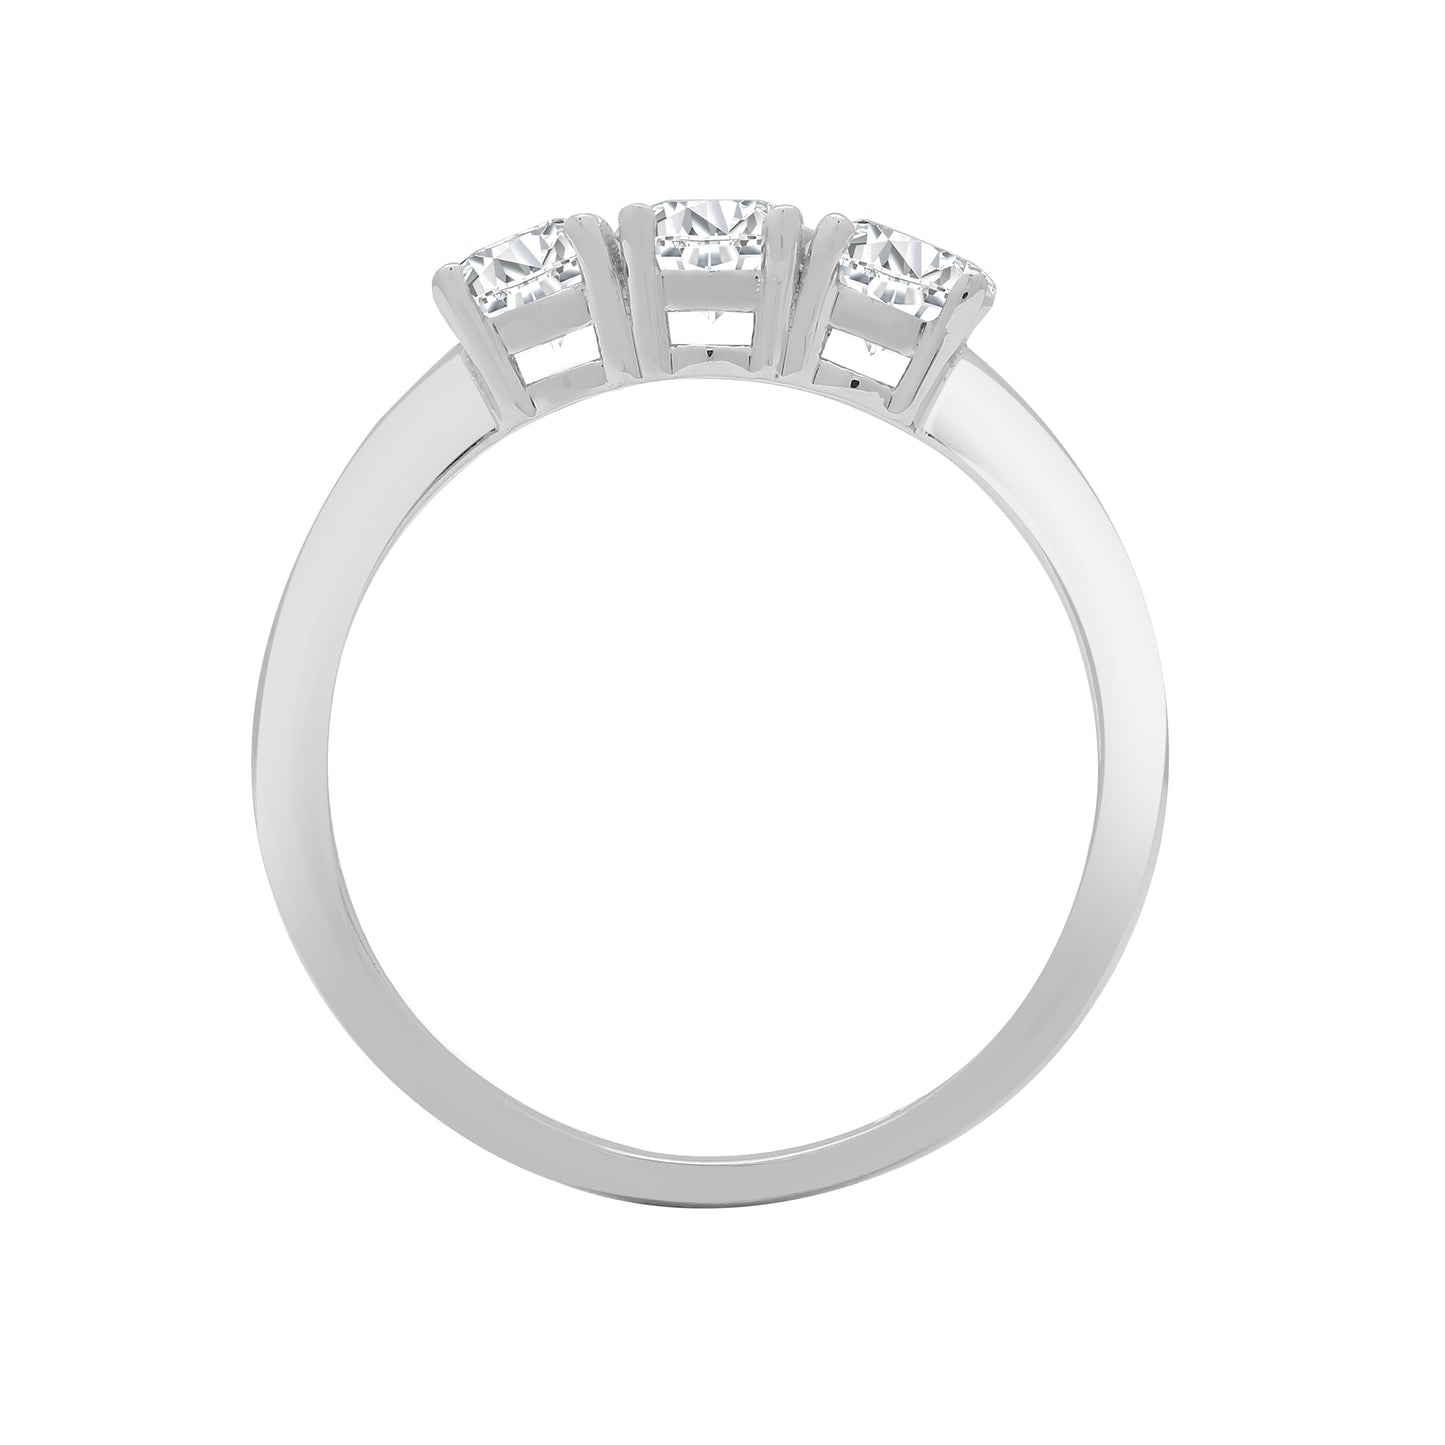 18ct White Gold  1.25ct Diamond 3 Stone Uniform Trilogy Ring 5mm - 18R945-125